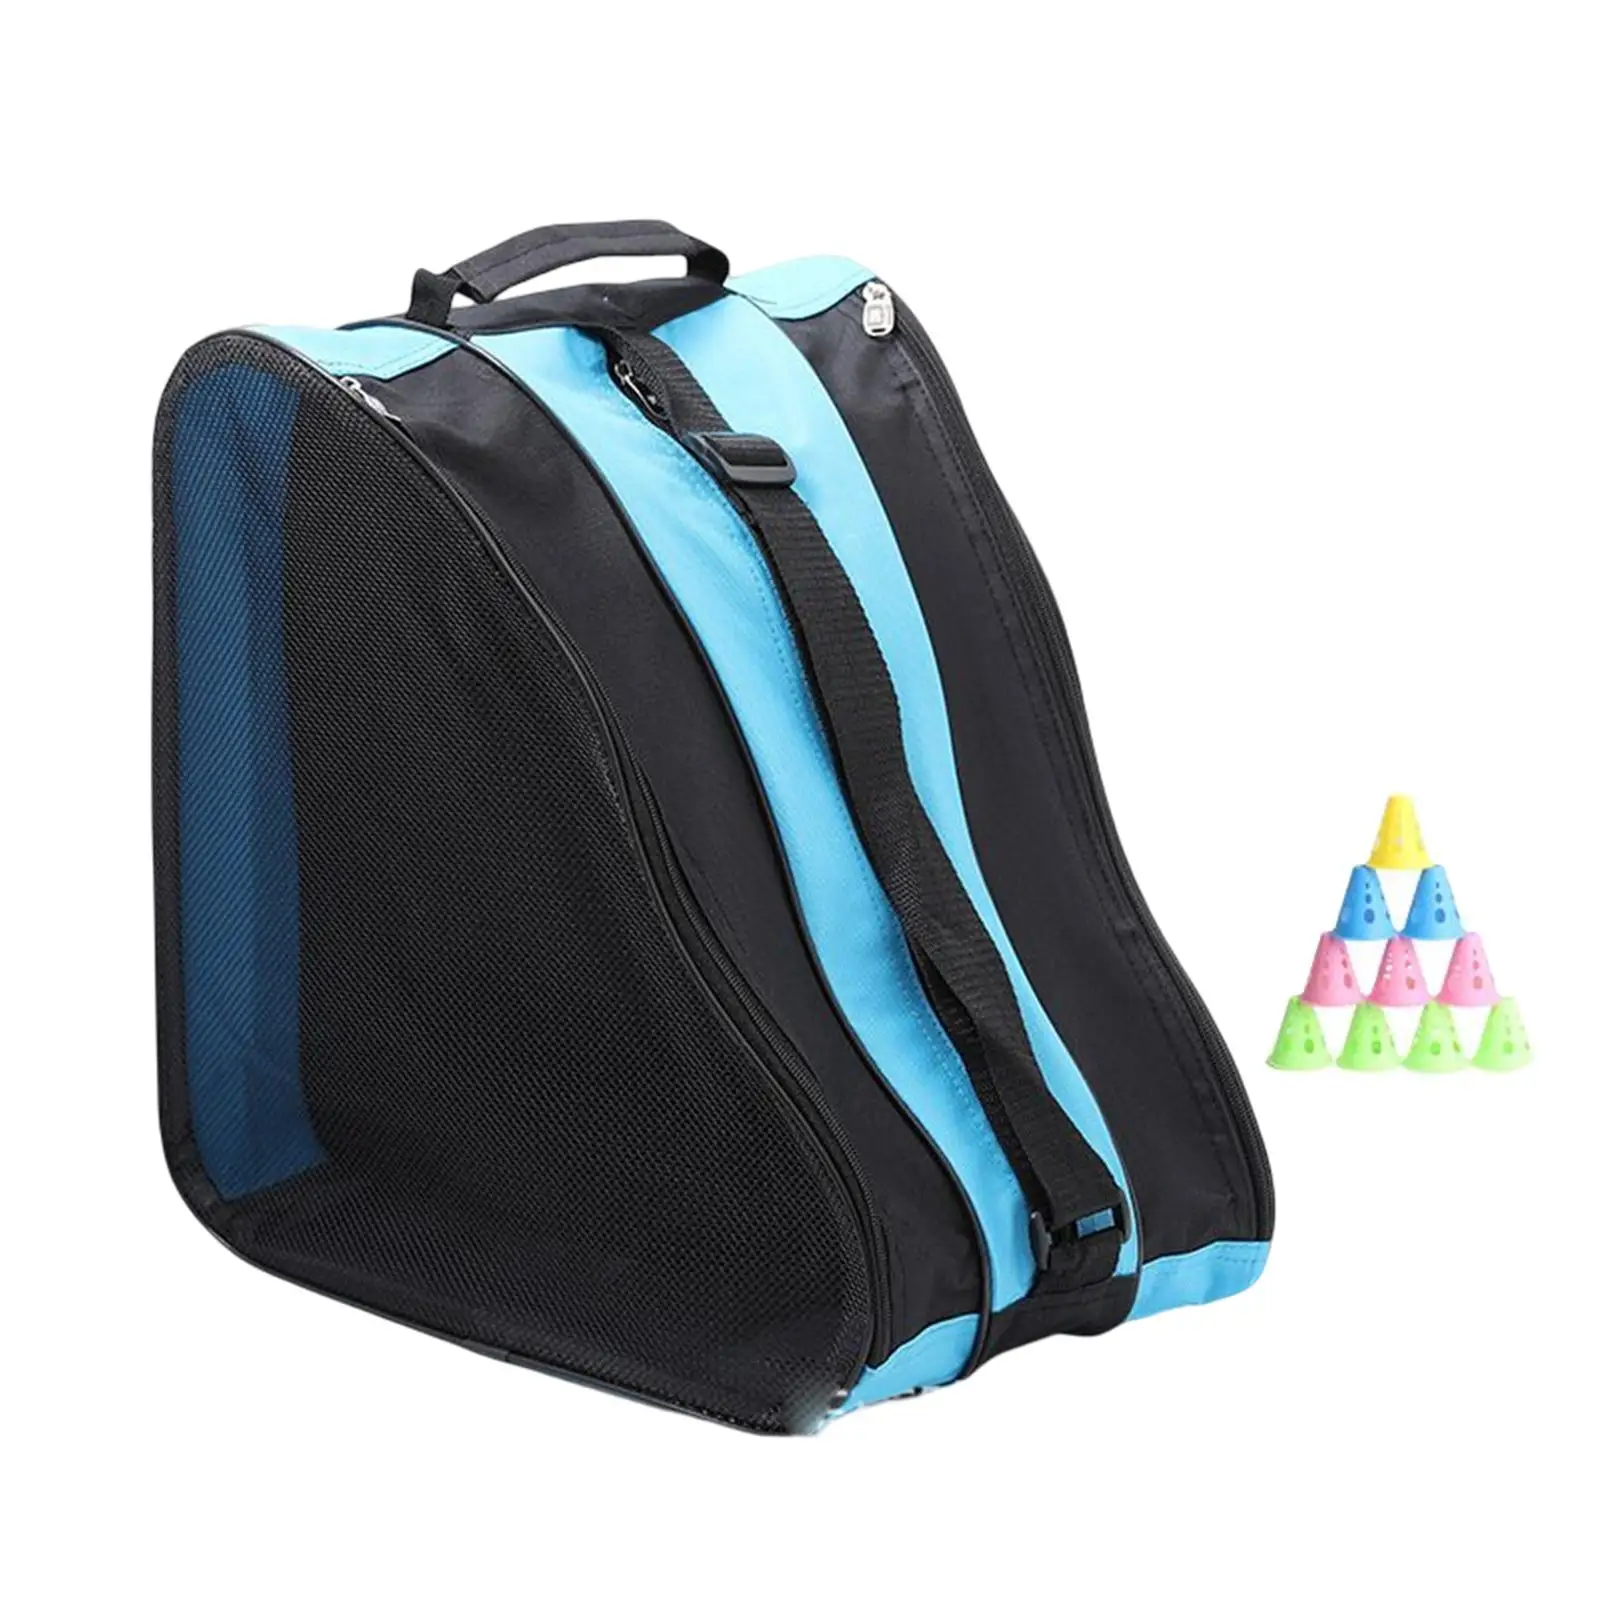 Roller Skate Bag Breathable Ice Skate Bag Carry Handle and Shoulder Strap, Triangle Skate Bag for Adult Accessories